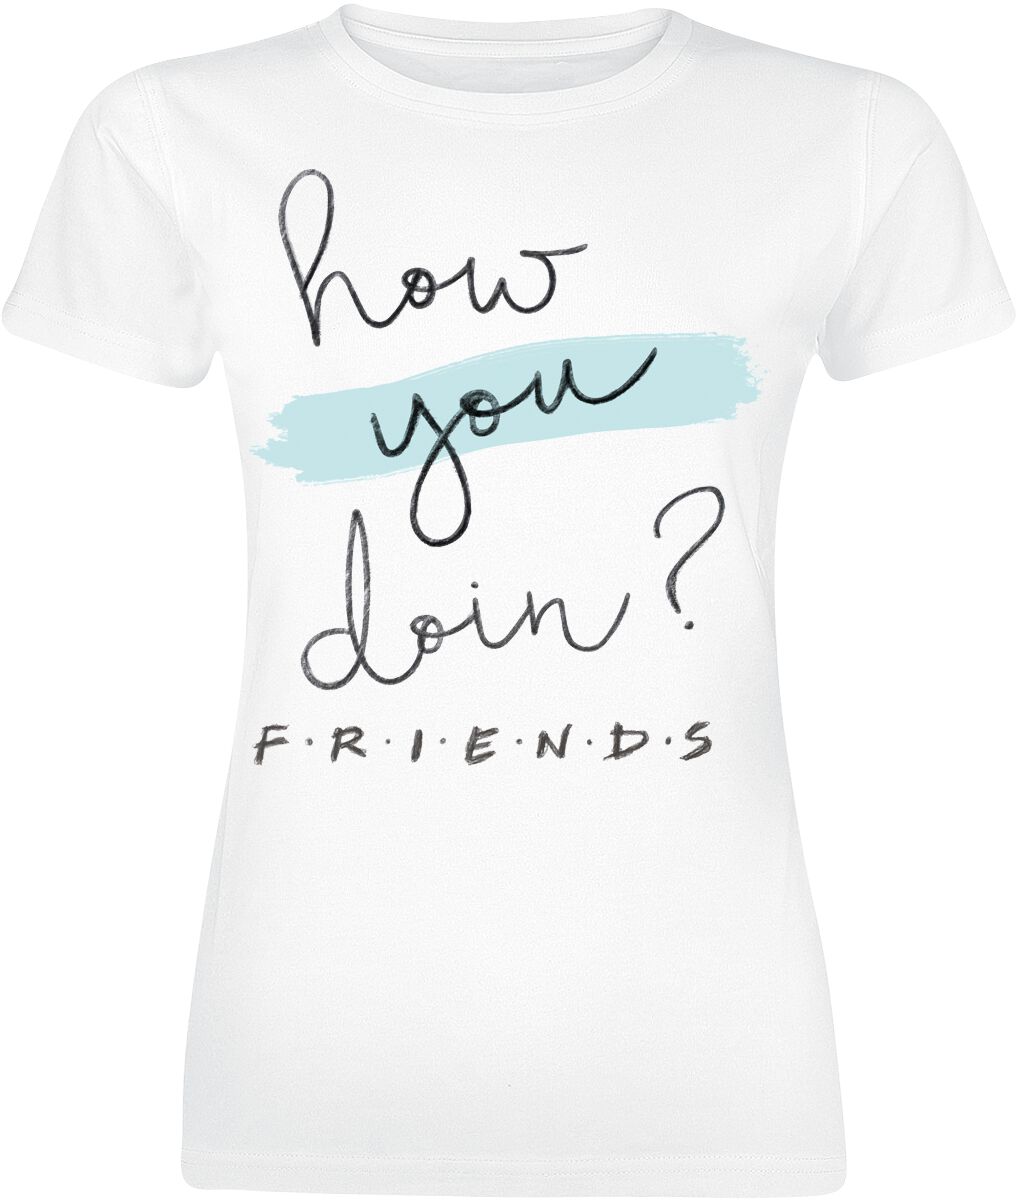 Friends How You Doin'? T-Shirt white